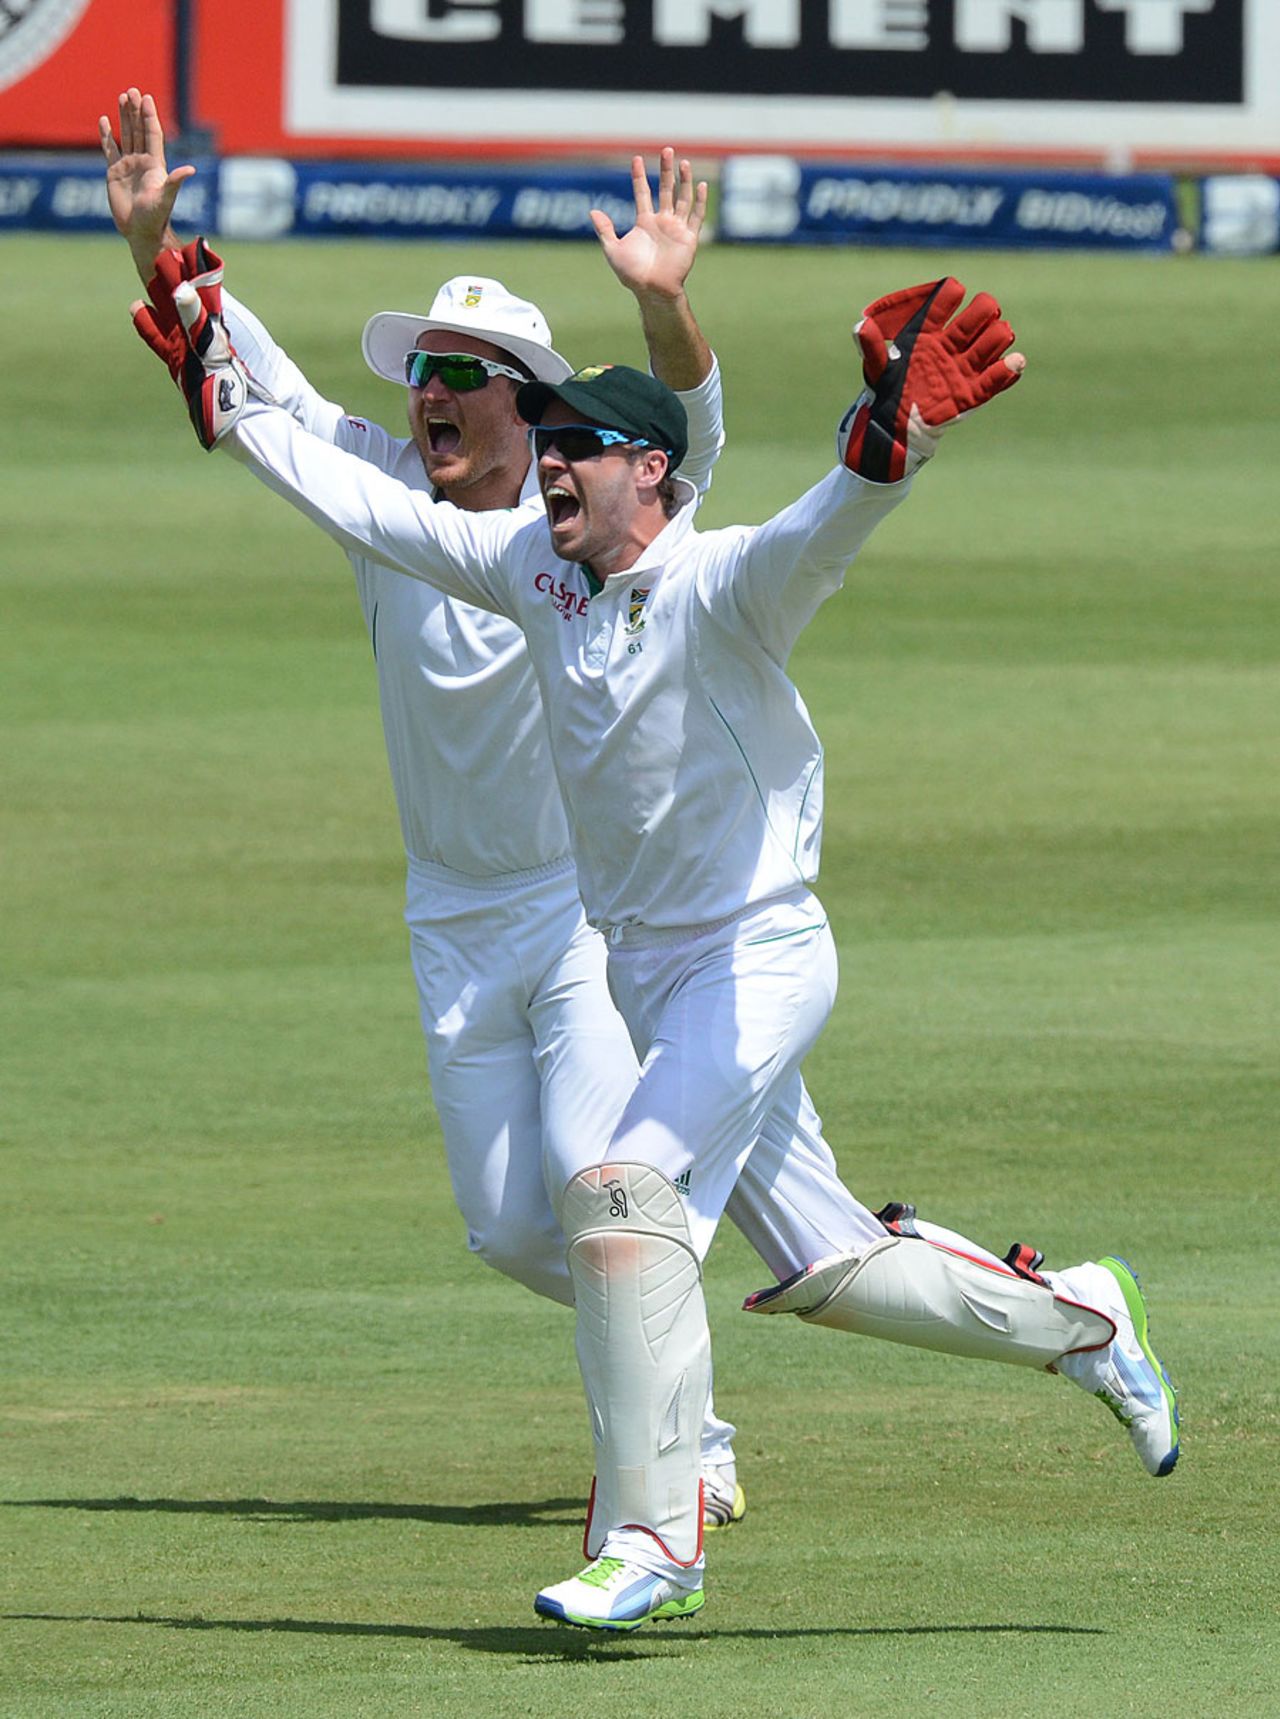 AB de Villiers celebrates an outside edge, South Africa v Pakistan, 1st Test, Johannesburg, 3rd day, February 3, 2013